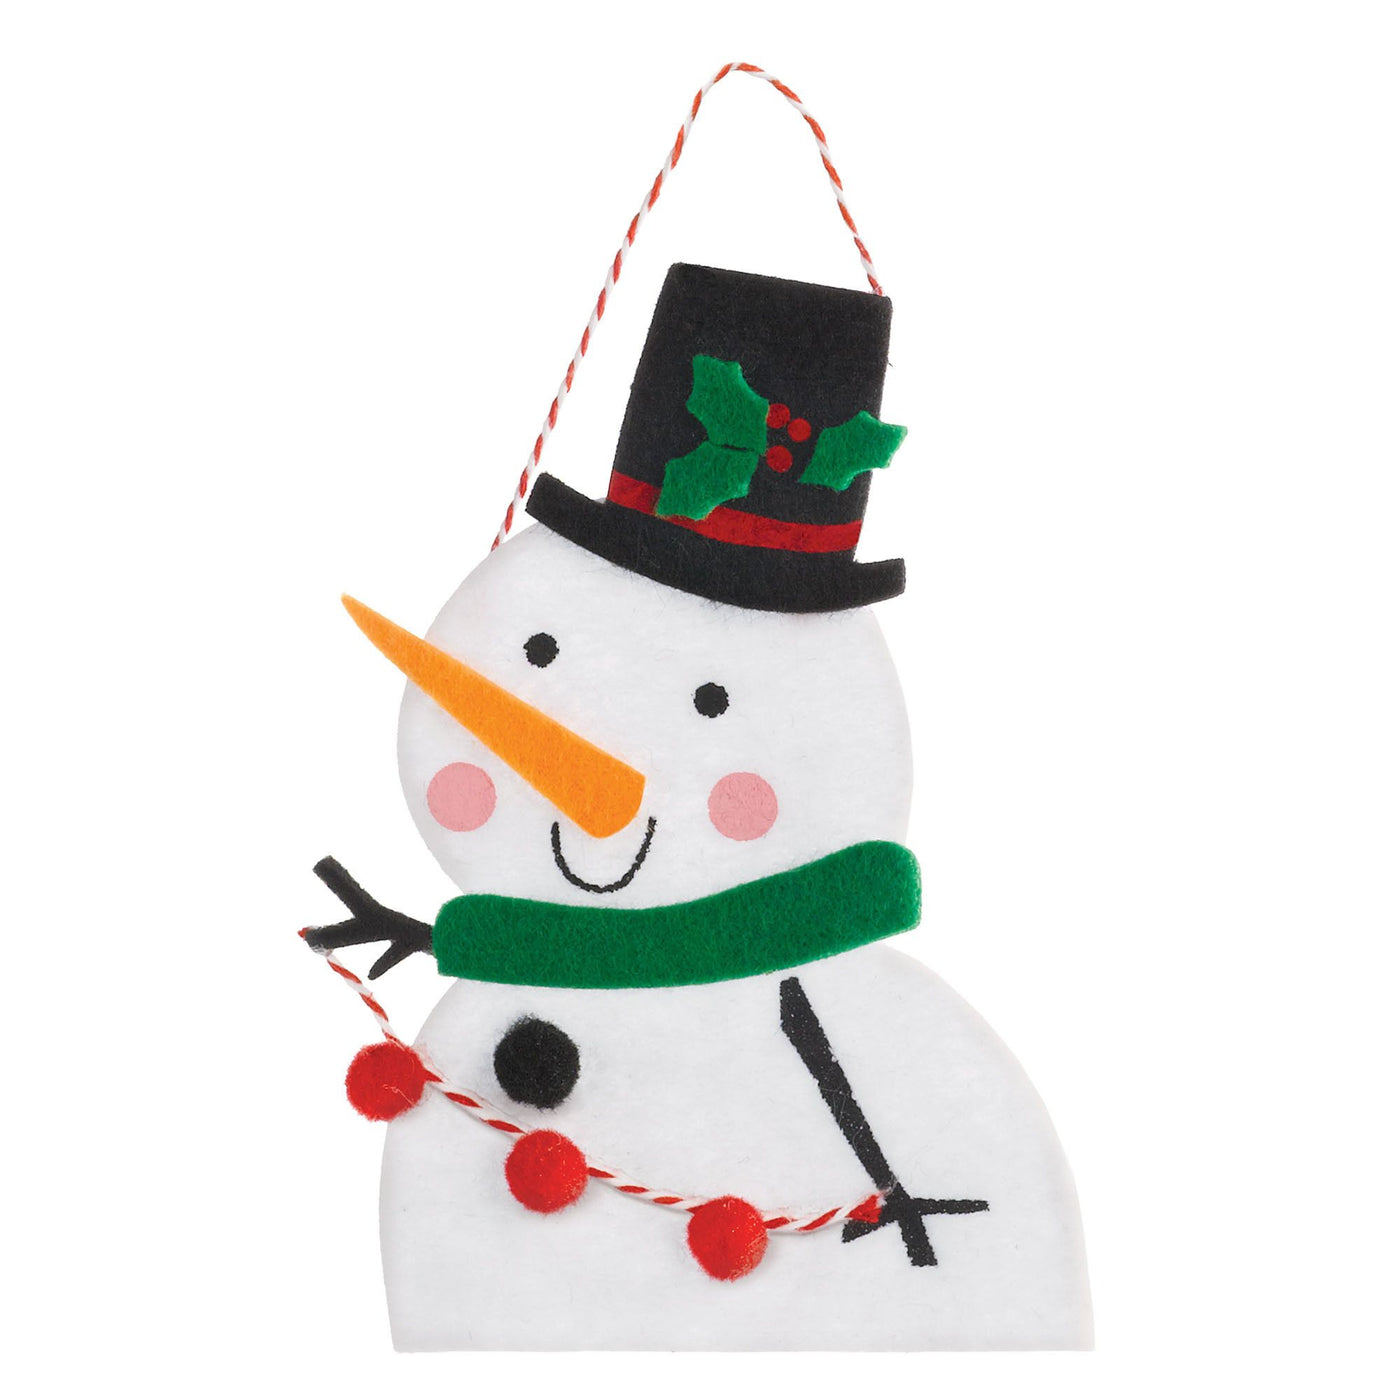 Felt Christmas Tree Ornament - Snowman